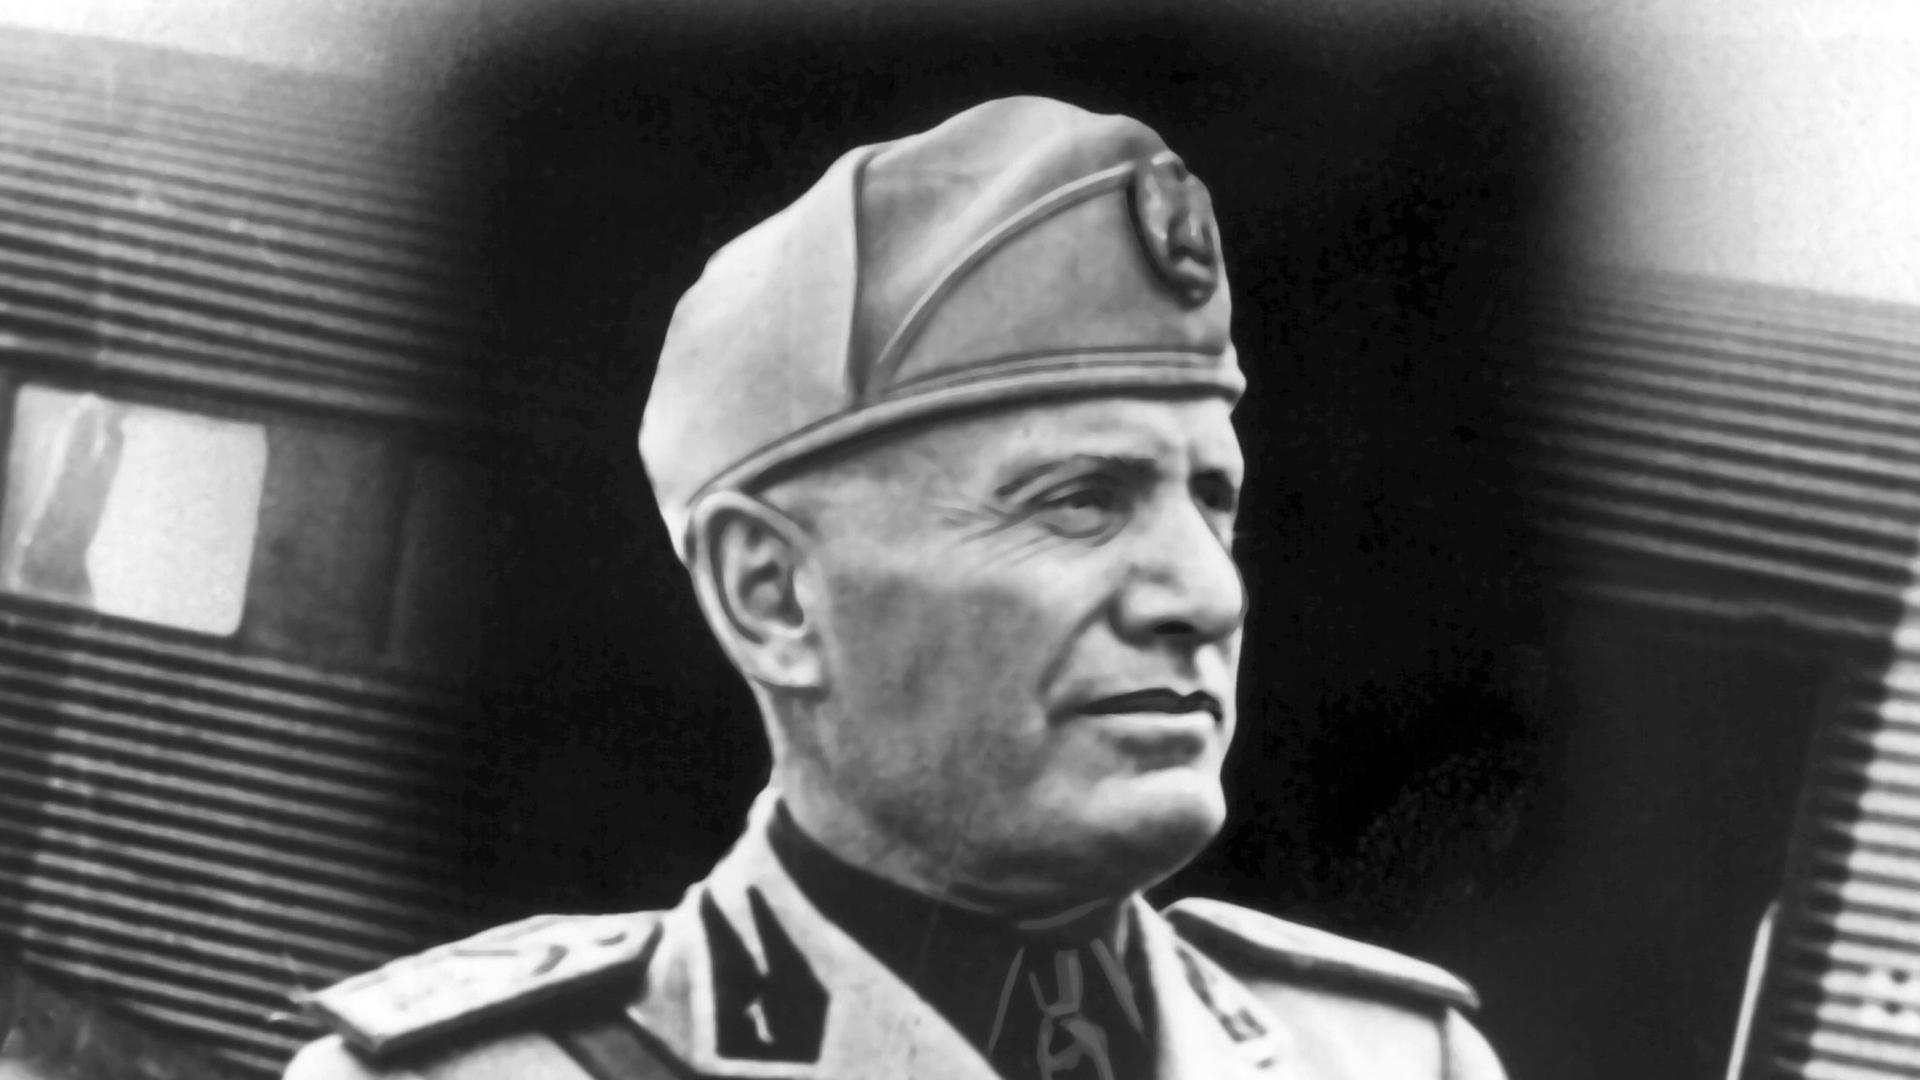 Porträtaufnahme von Benito Mussolini in Uniform